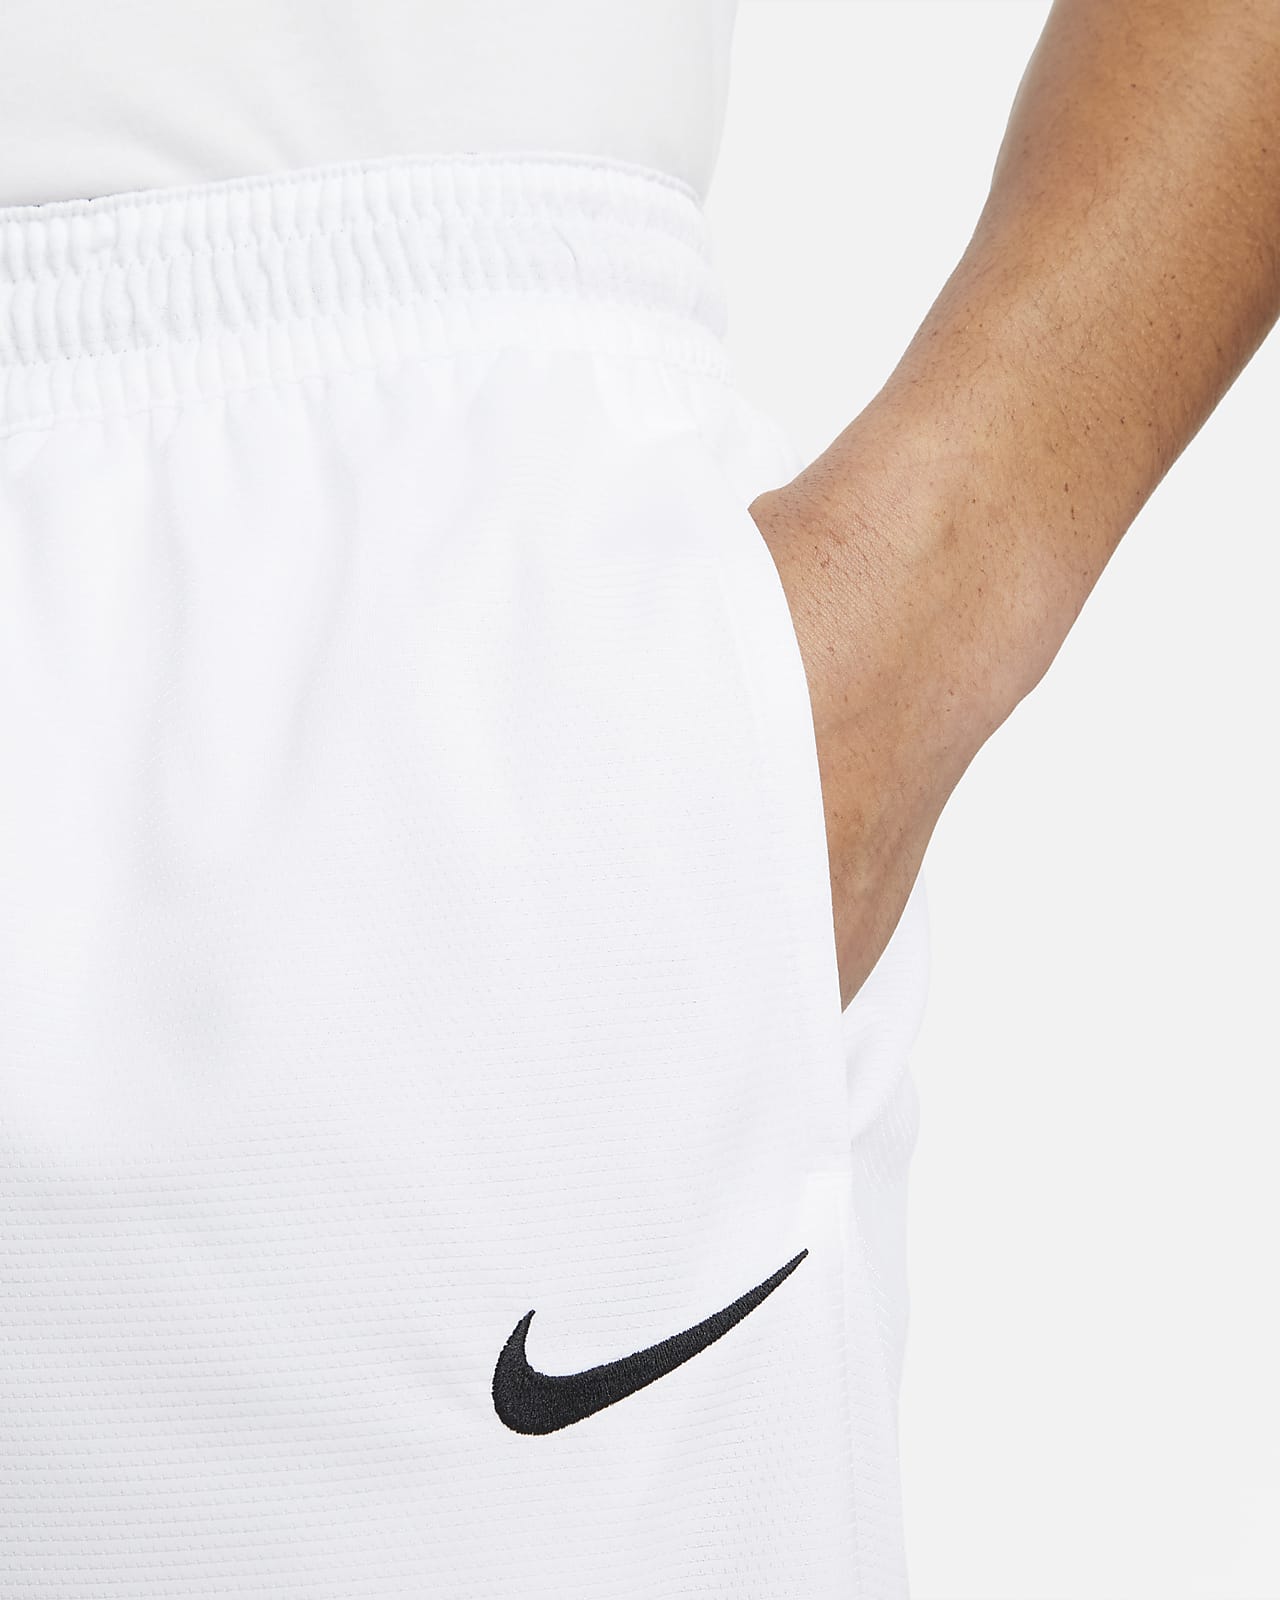 Confidencial Anoi Abandono Nike Dri-FIT Icon Men's Basketball Shorts. Nike.com